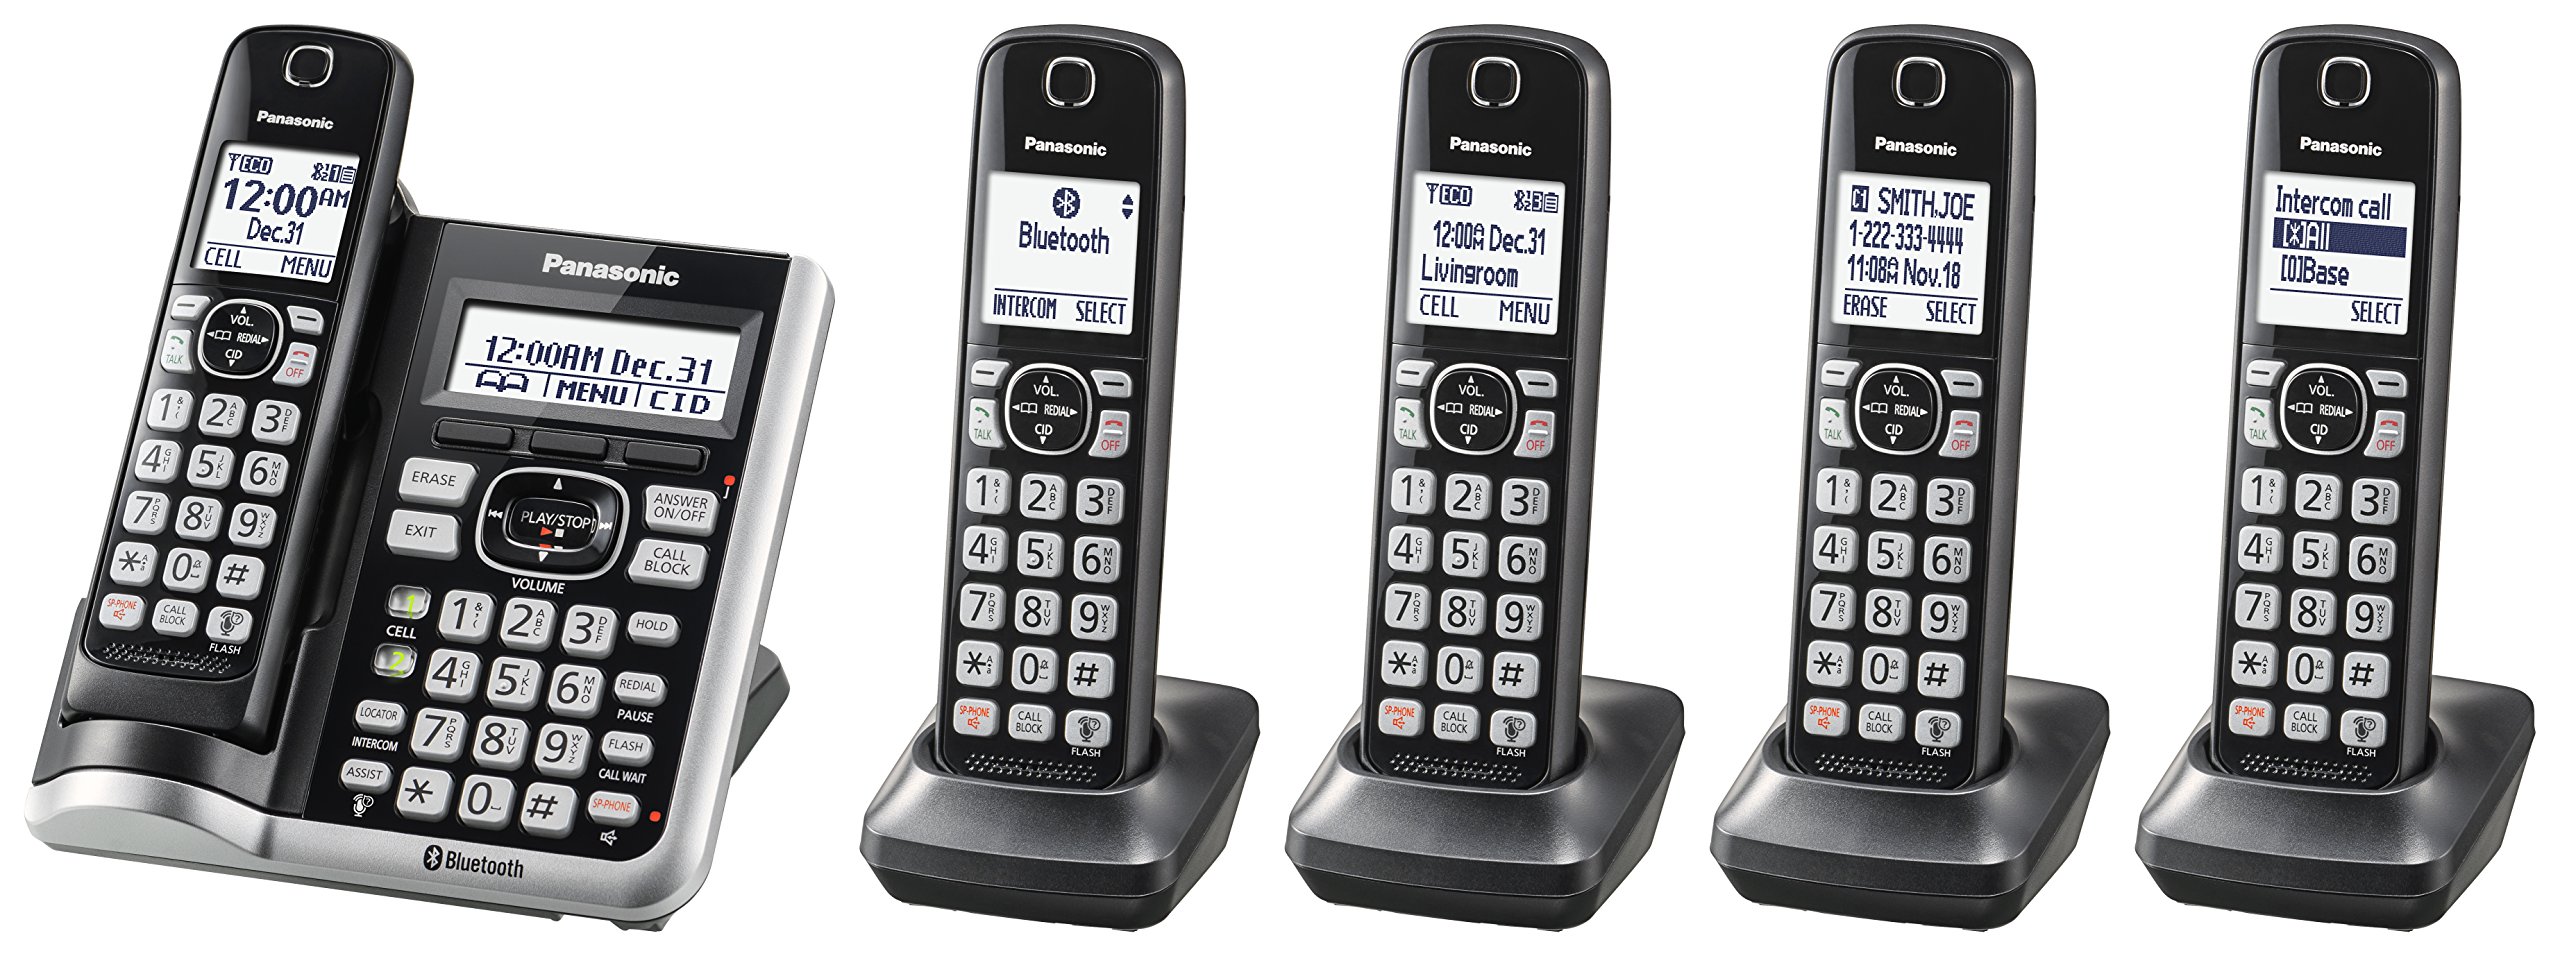  Panasonic Link2Cell Bluetooth コードレス電話システム、音声アシスタント、コール ブロック、留守番電話機能、拡張可能な家庭用電話機 (ハンドセット 5...